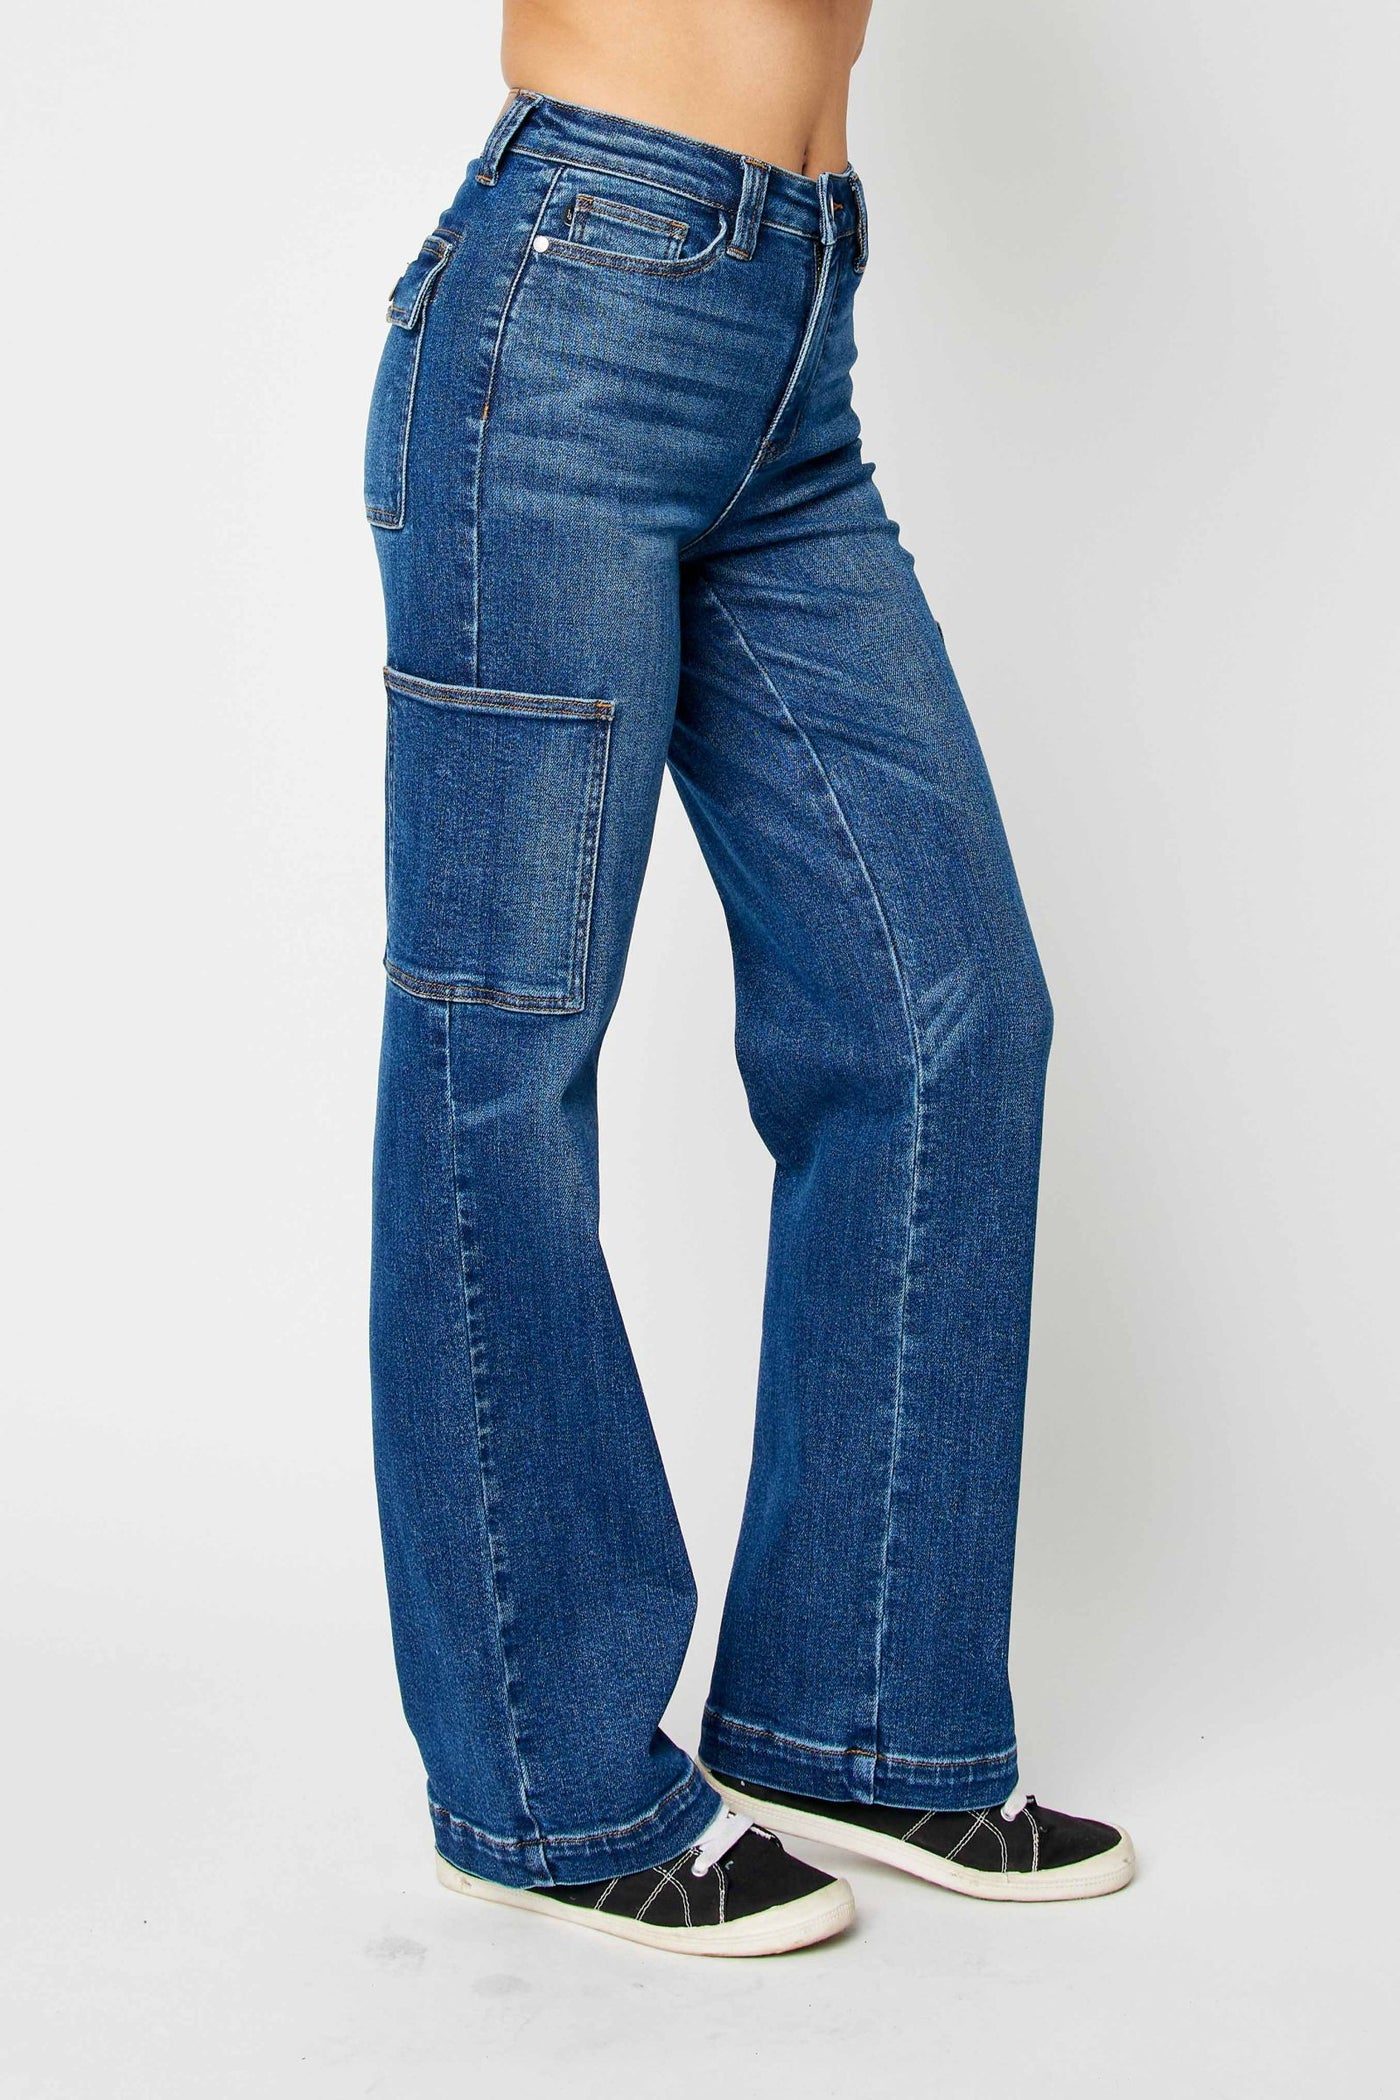 Judy Blue Jeans 88725